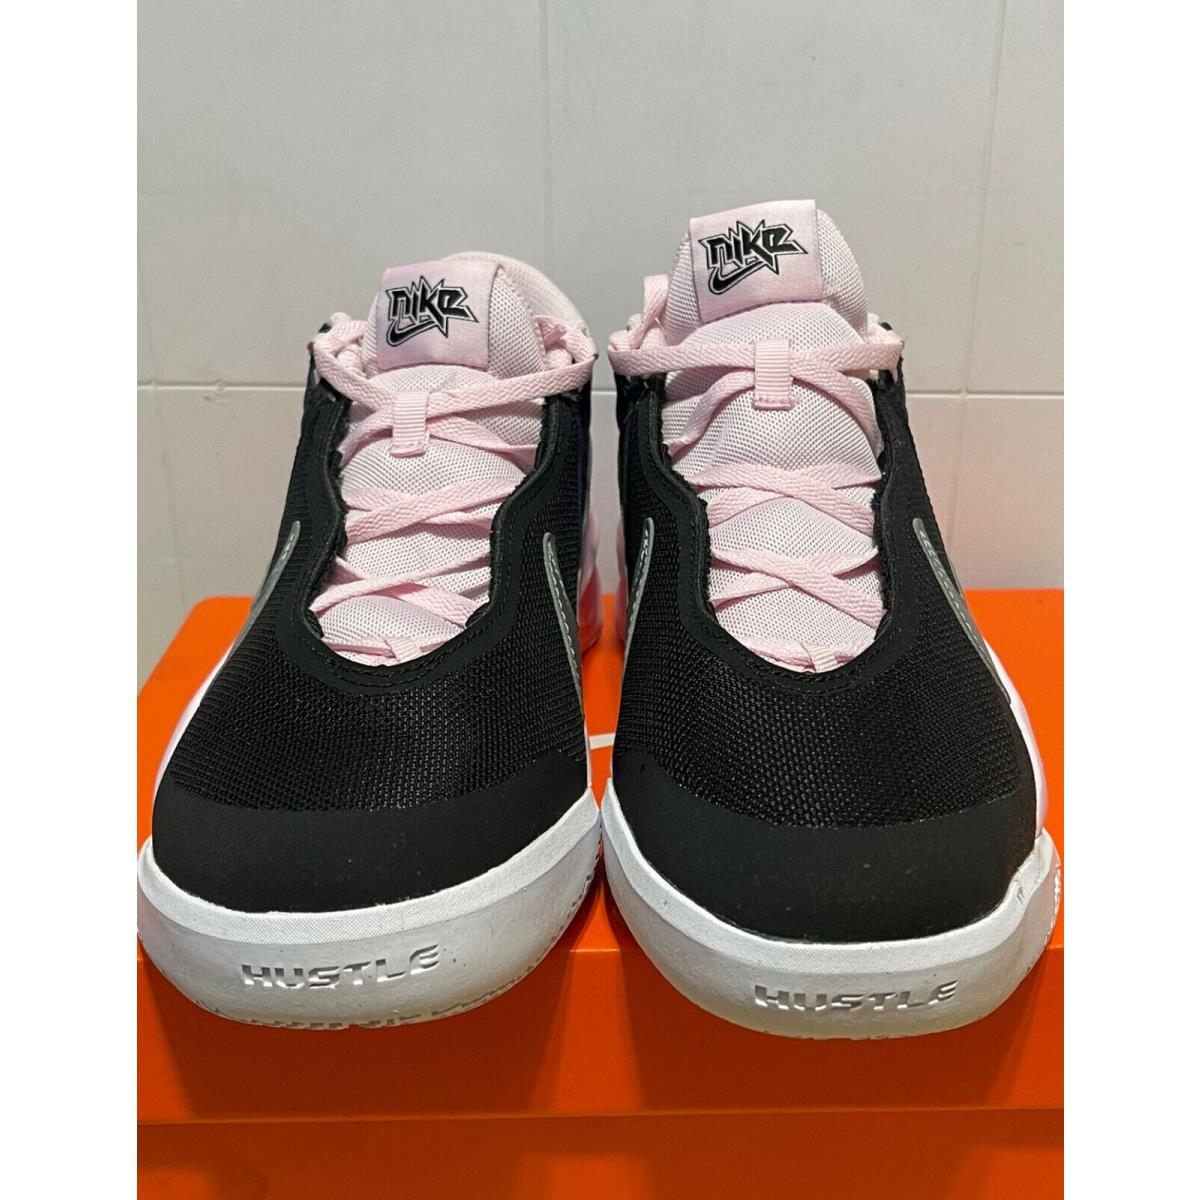 Nike shoes  - Black/ pink 2